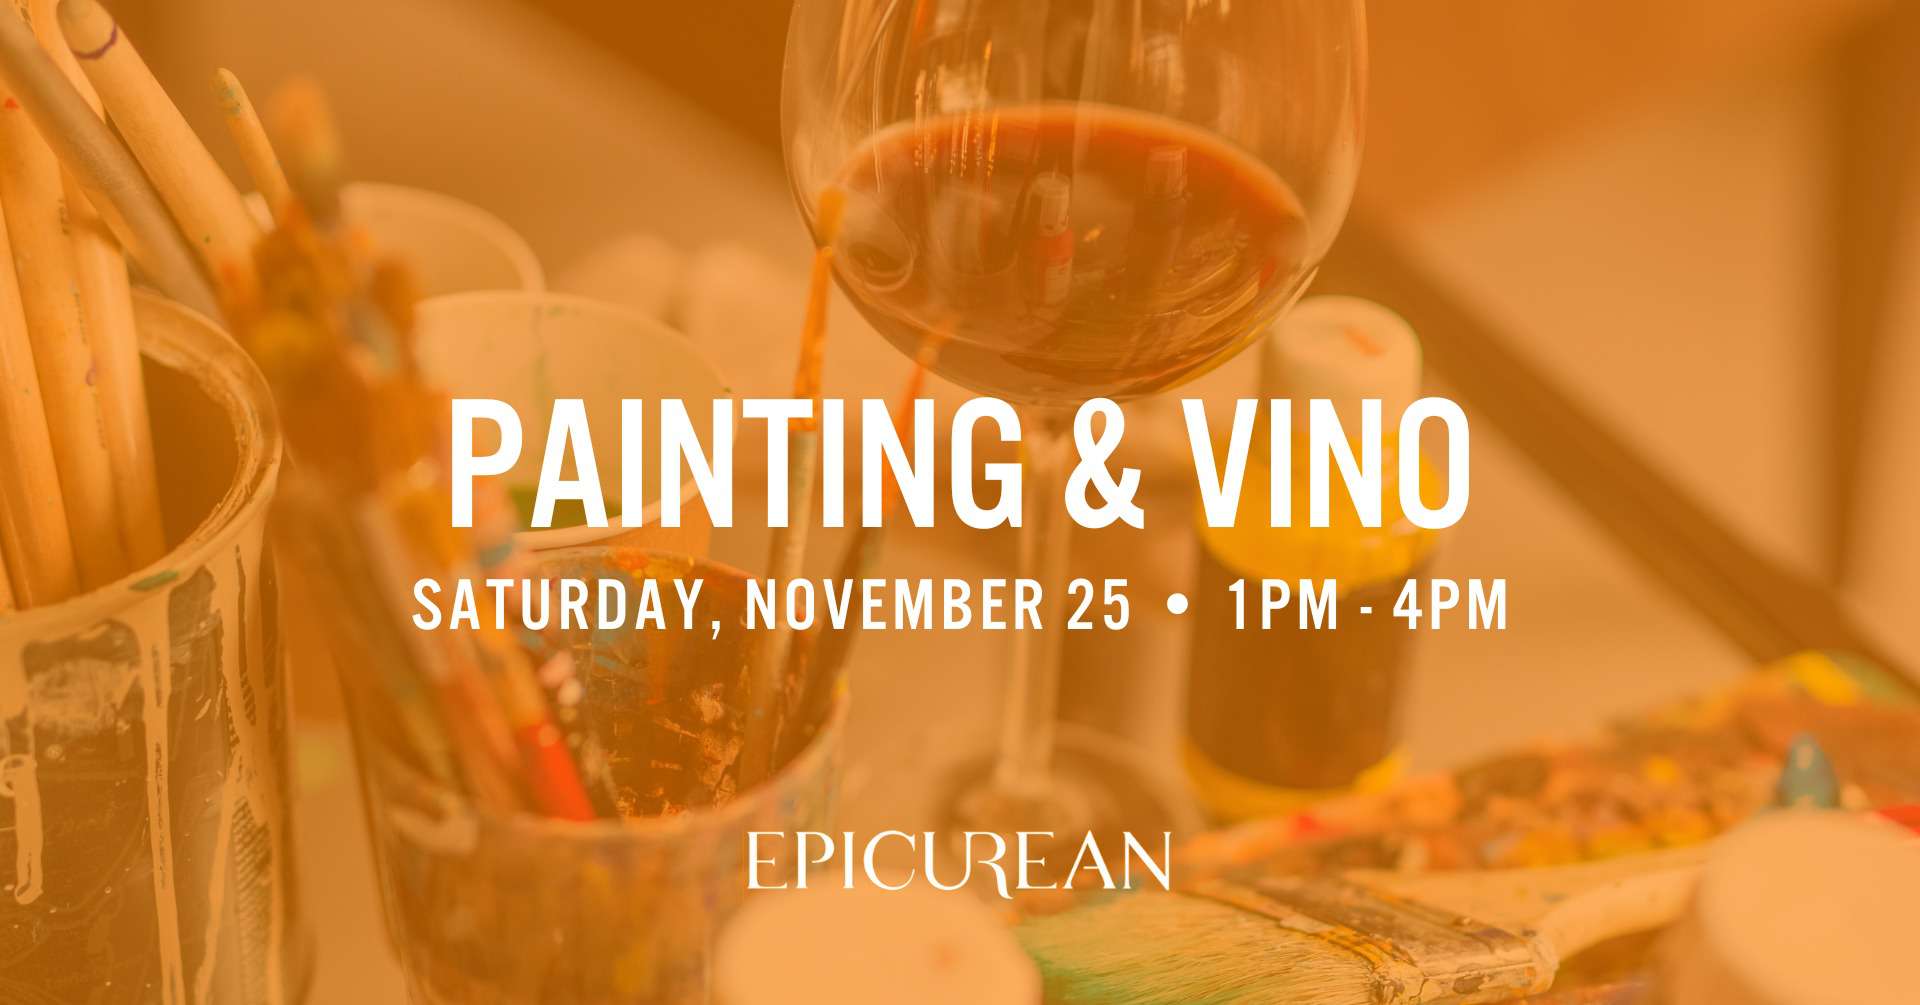 Painting & Vino Saturday, November 25 1pm to 4pm